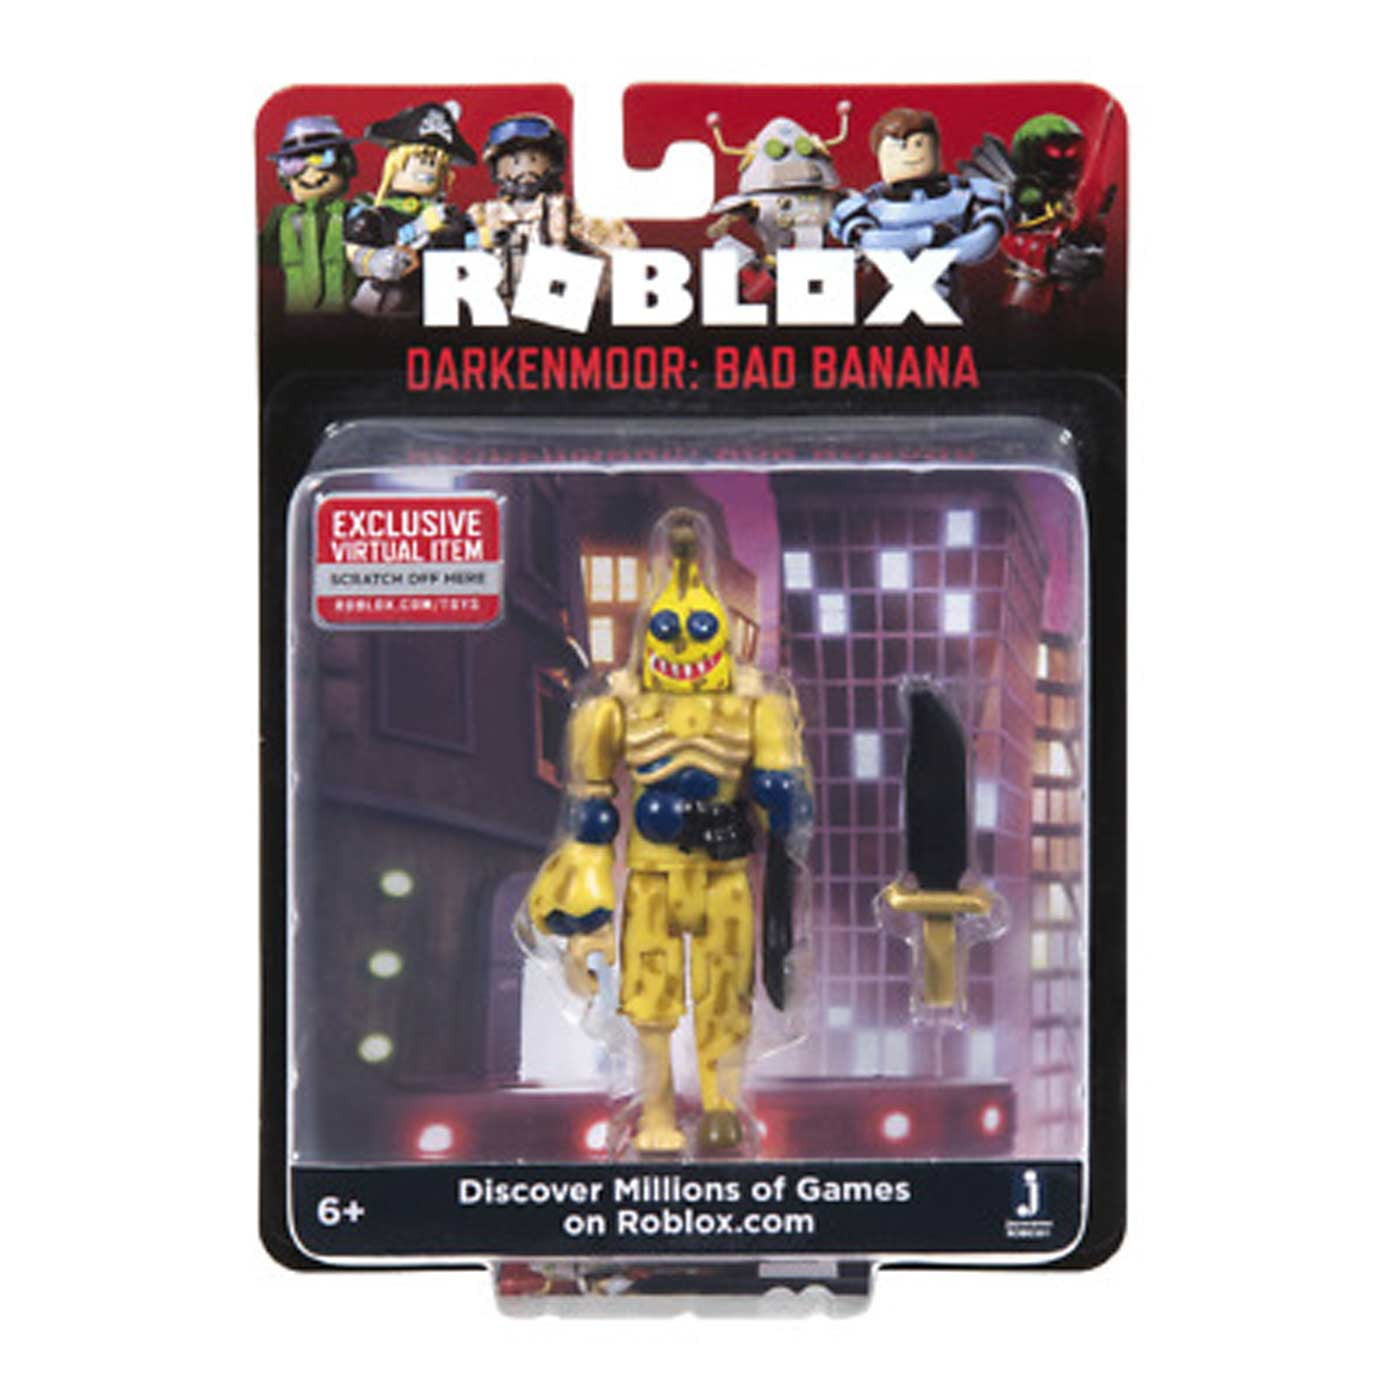 Roblox Action Collection Darkenmoor Bad Banana Figure Pack Includes Exclusive Virtual Item Walmart Com Walmart Com - purple beans roblox